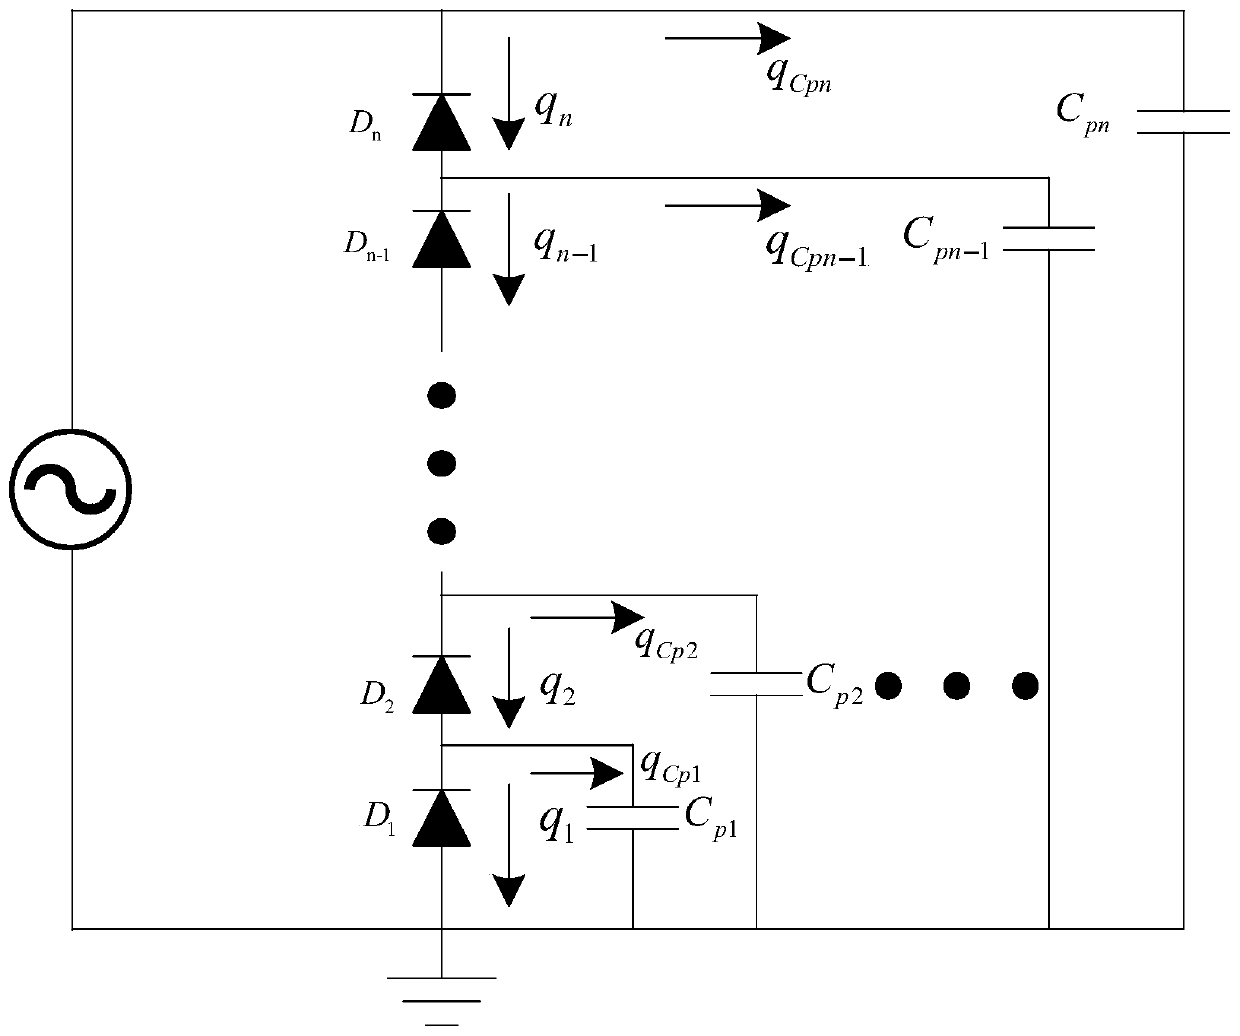 Series diode circuit